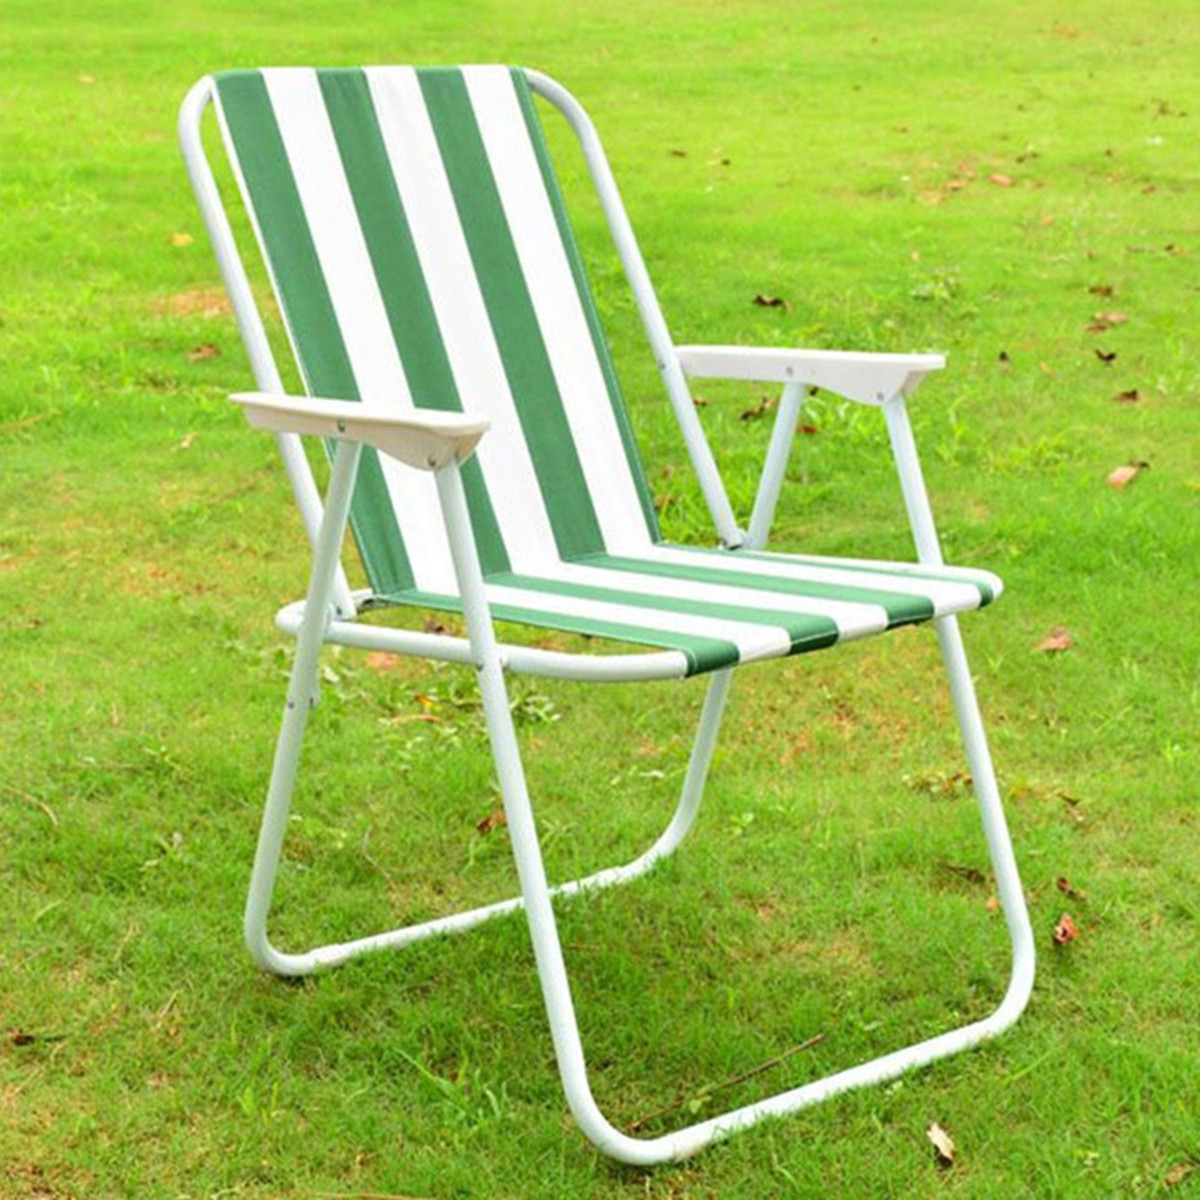 Oxford-Fishing-Folding-Chair-Camping-Hiking-Picnic-Seat-Portable-Stool-1641658-1